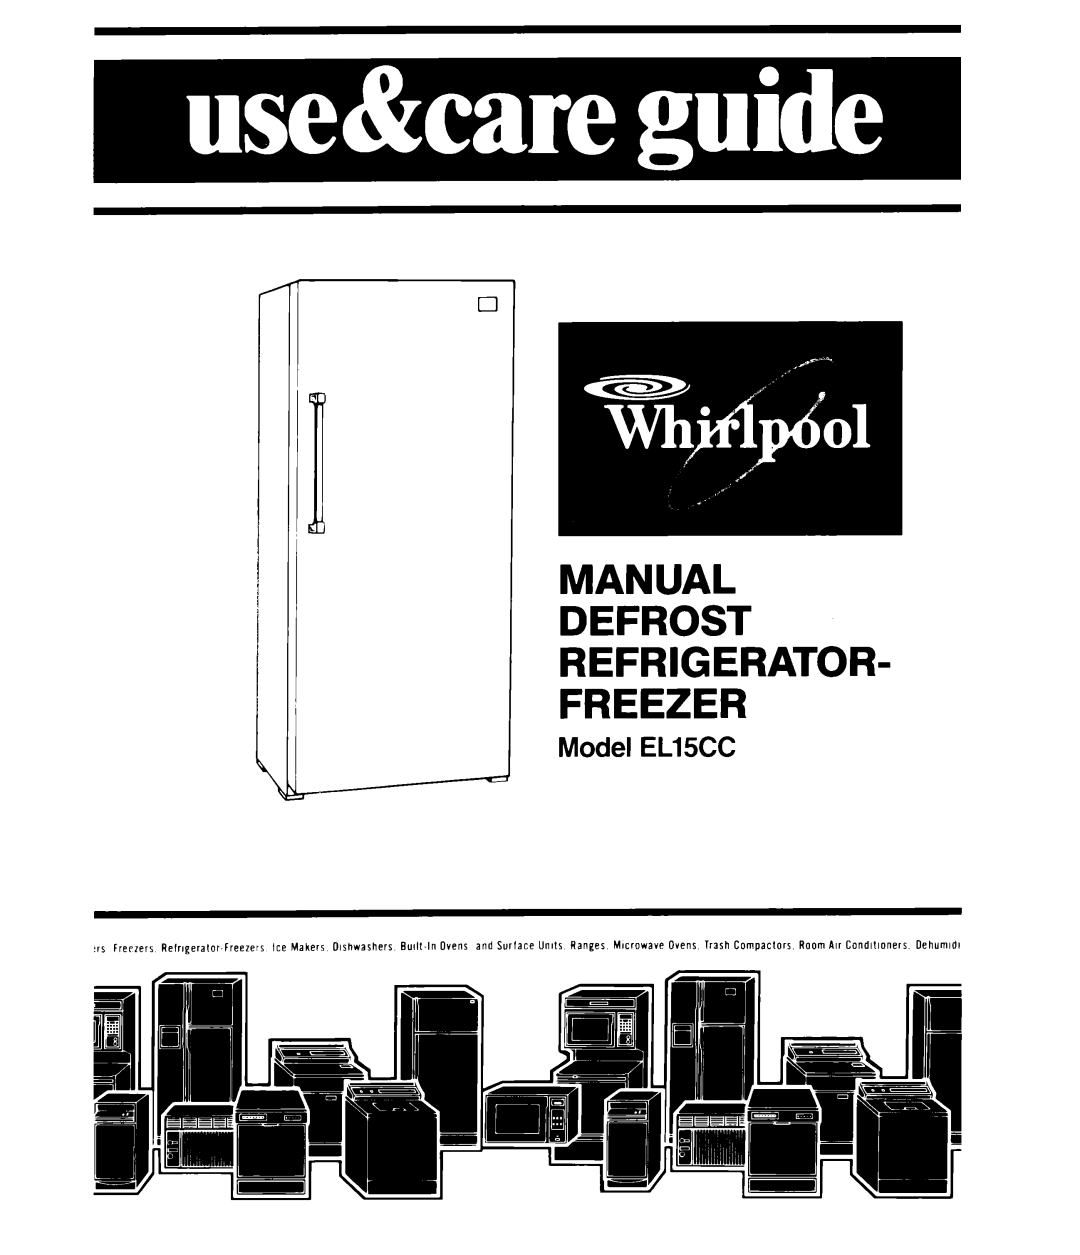 Whirlpool manual Manual Defrost Refrigerator Freezer, Model EL15CC, s Frep~ers, Relr,geralor-Free~ers, Bull-In 